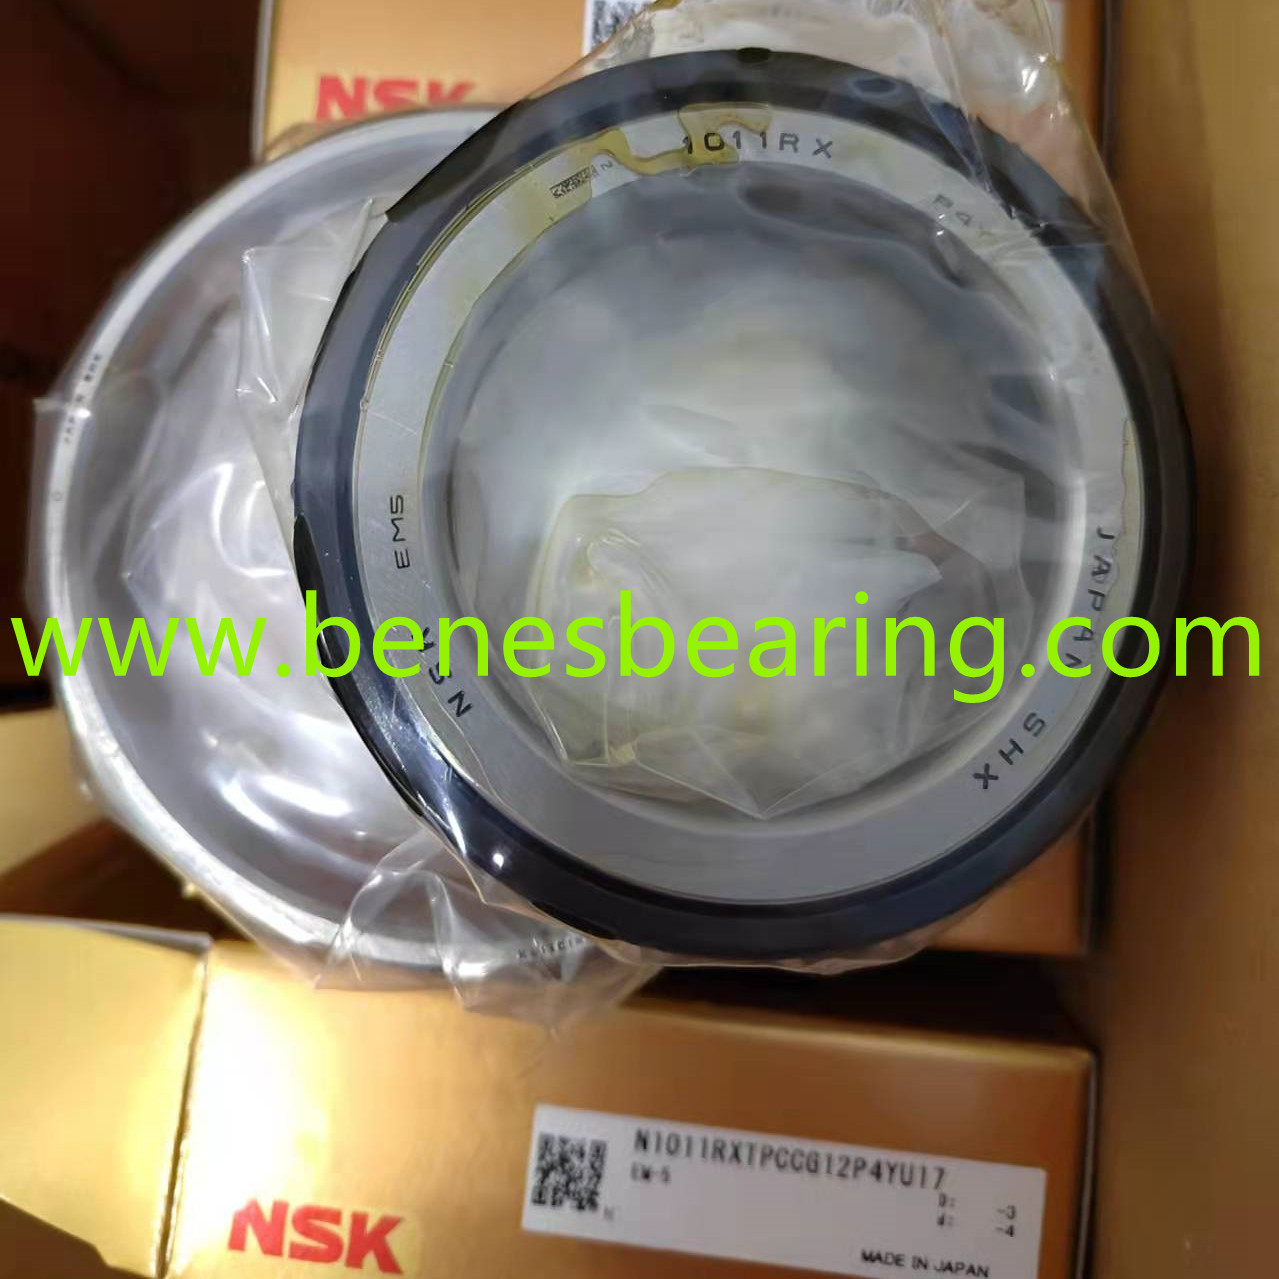 NSK N1011RXTPCCG12P4YU17   Cylindrical roller bearing